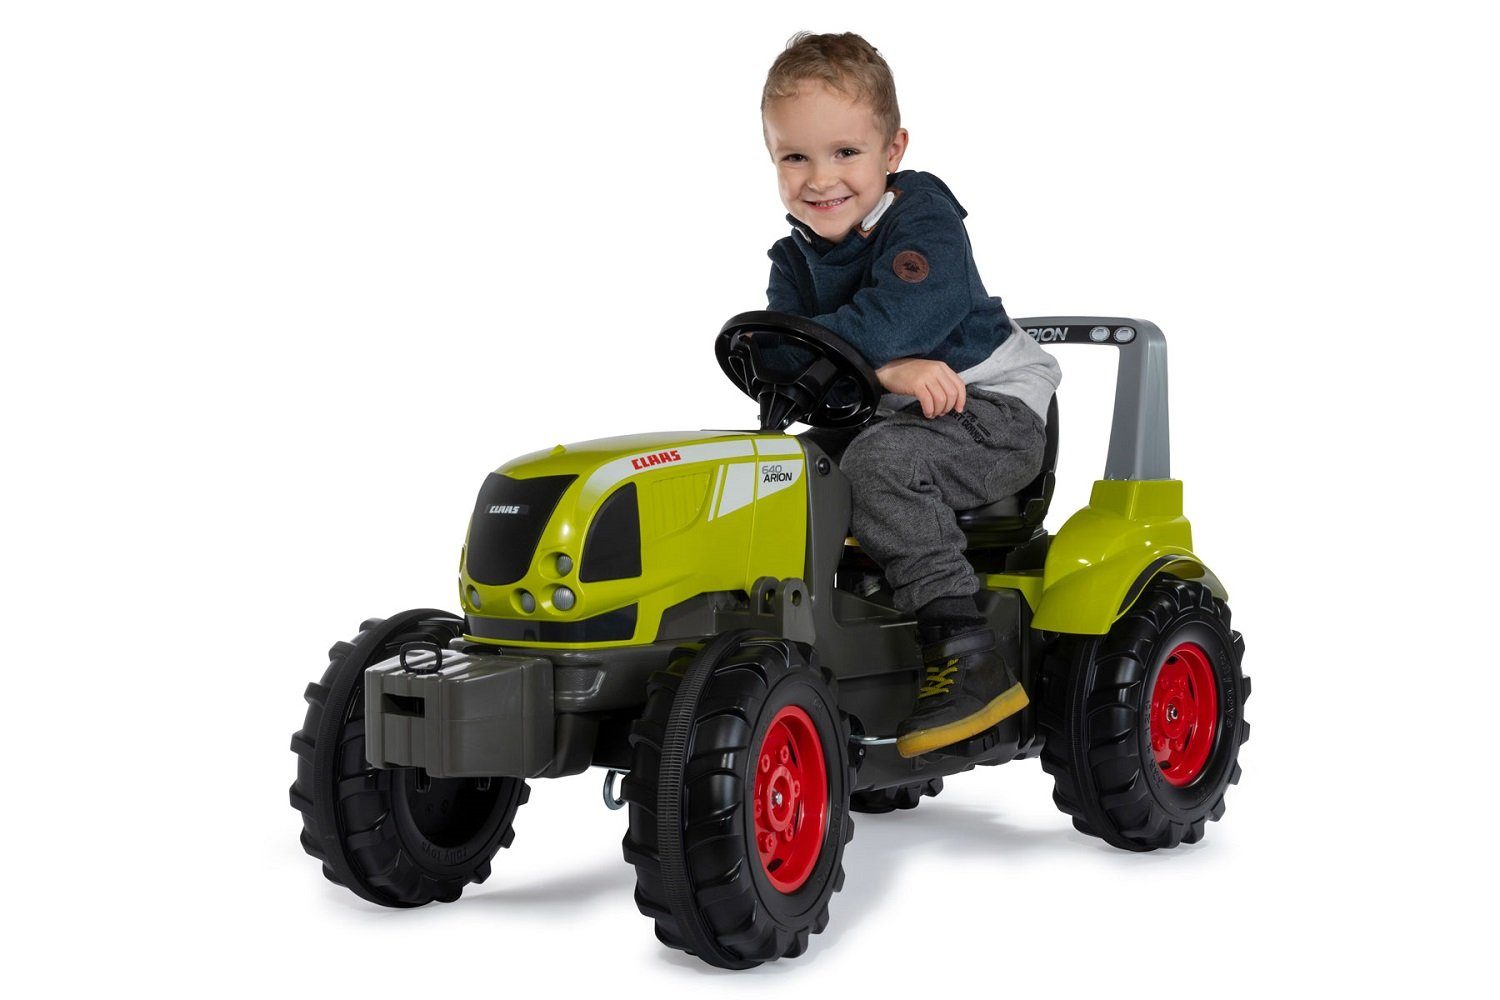 Trettraktor Toys rolly 640 Rolly Premium II Claas 720064 Farmtrac Arion toys®